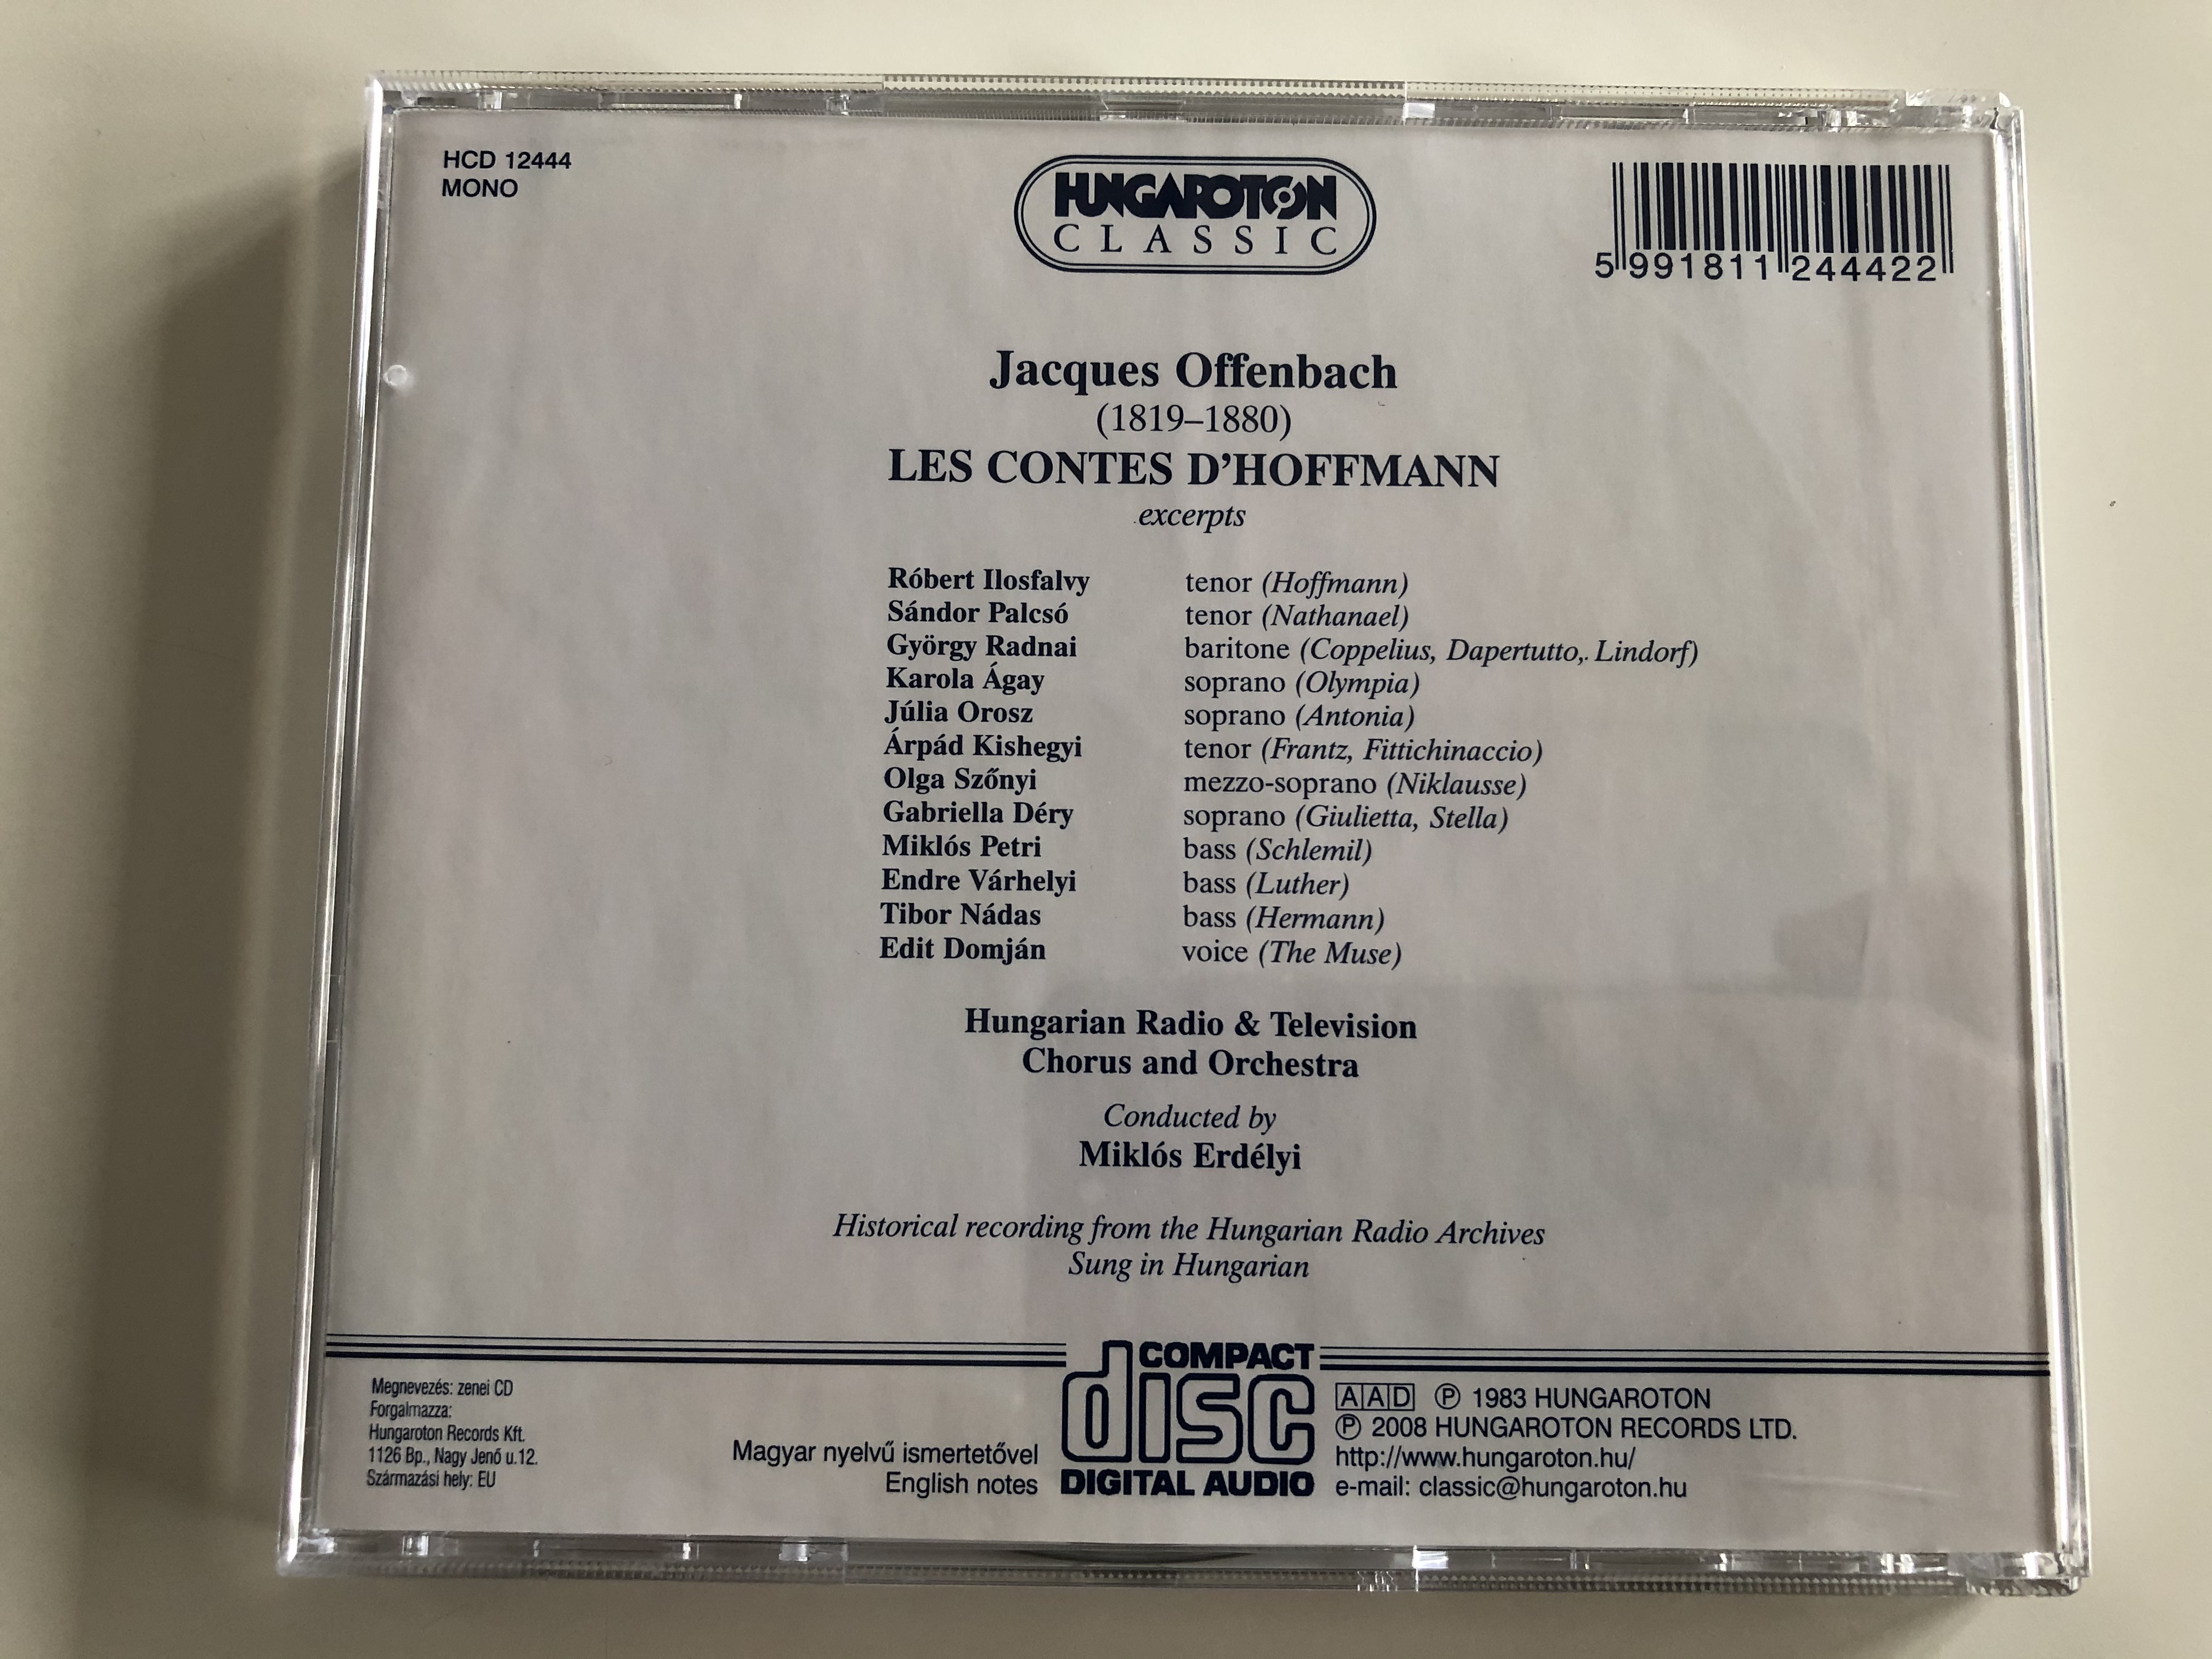 offenbach-les-contes-d-hoffmann-excerpts-hoffmann-mesei-reszletek-ilosfalvy-agay-orosz-dery-radnai-conducted-by-erdelyi-hungaroton-classic-audio-cd-1983-mono-hcd-12444-6-.jpg